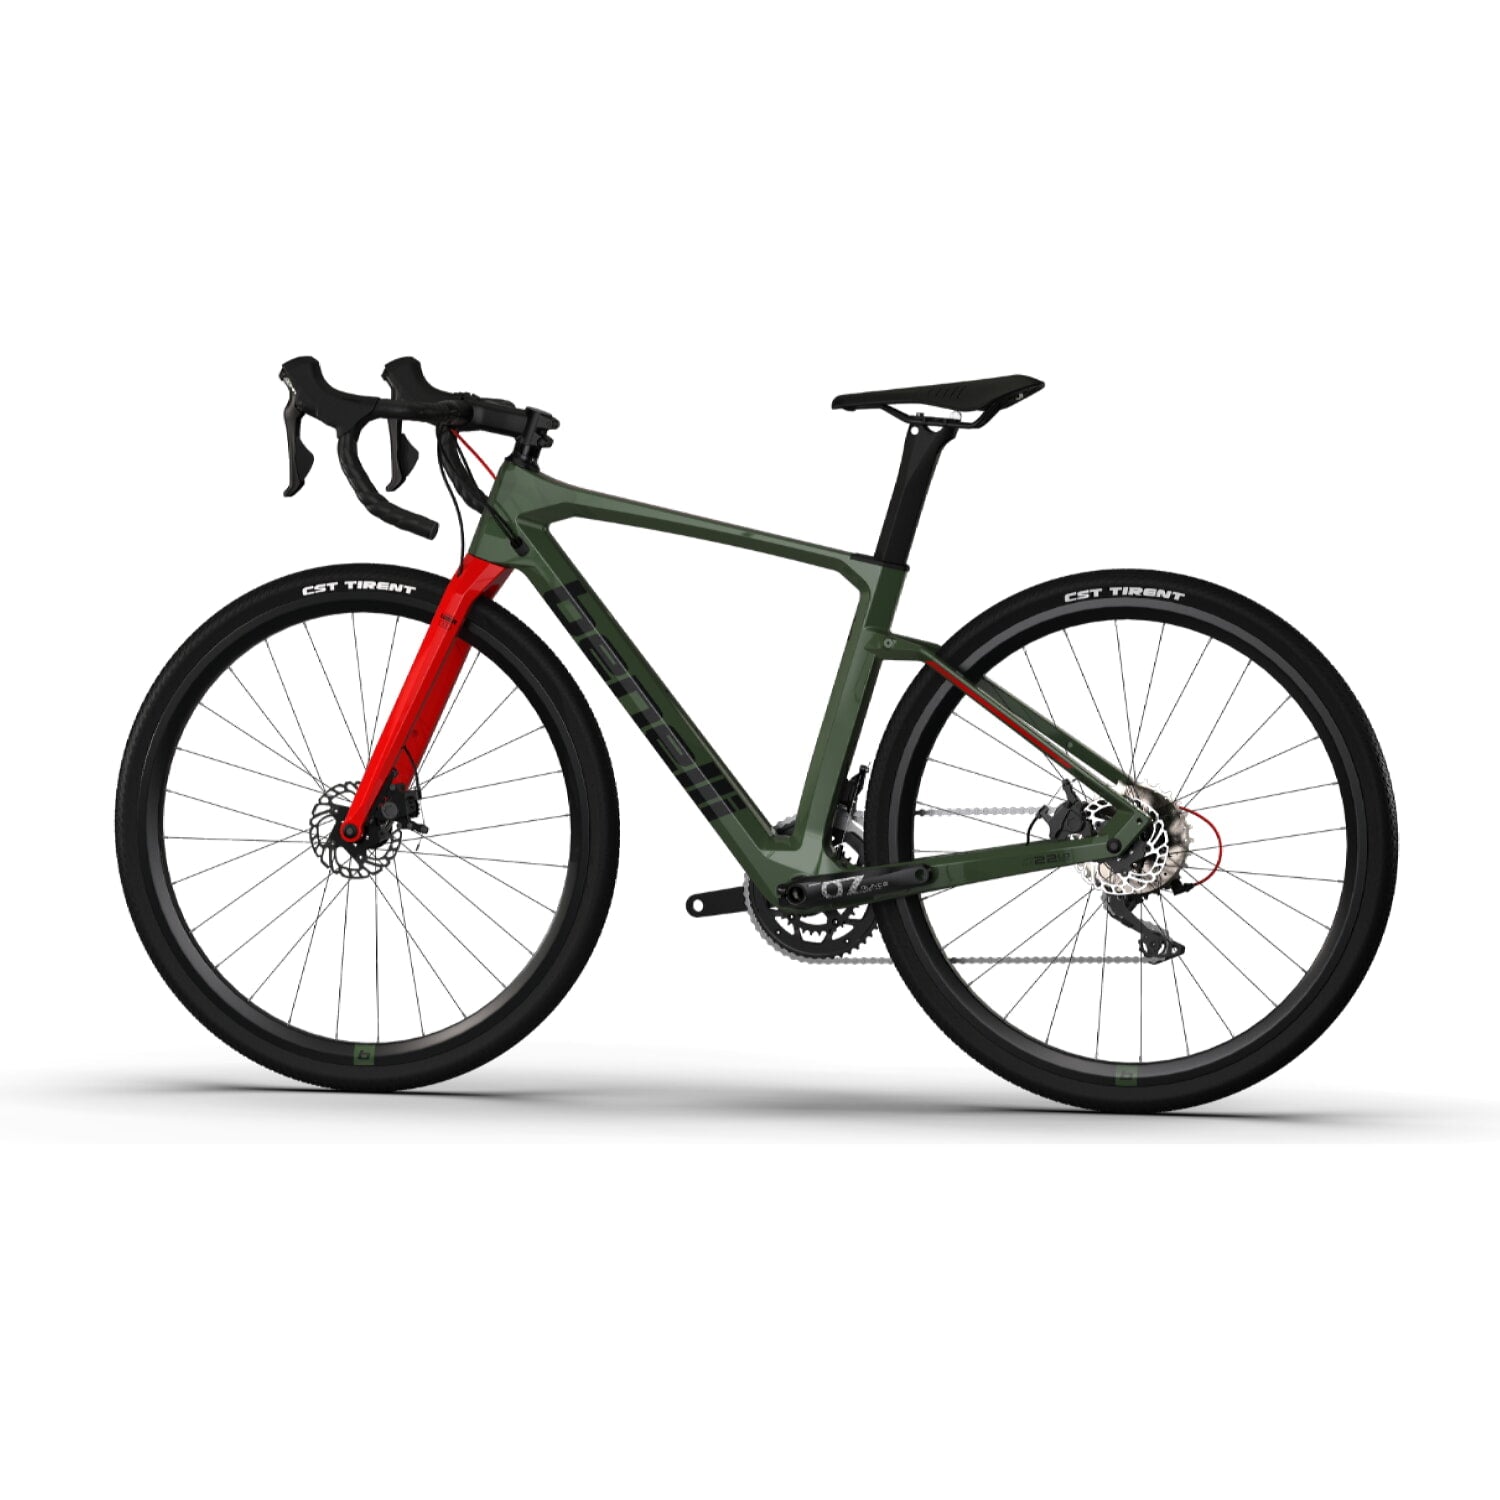 Bicicleta Gravel Benelli Carb. (G22 1.0 Adv Carb) Color Verde Militar/Negro Talla M